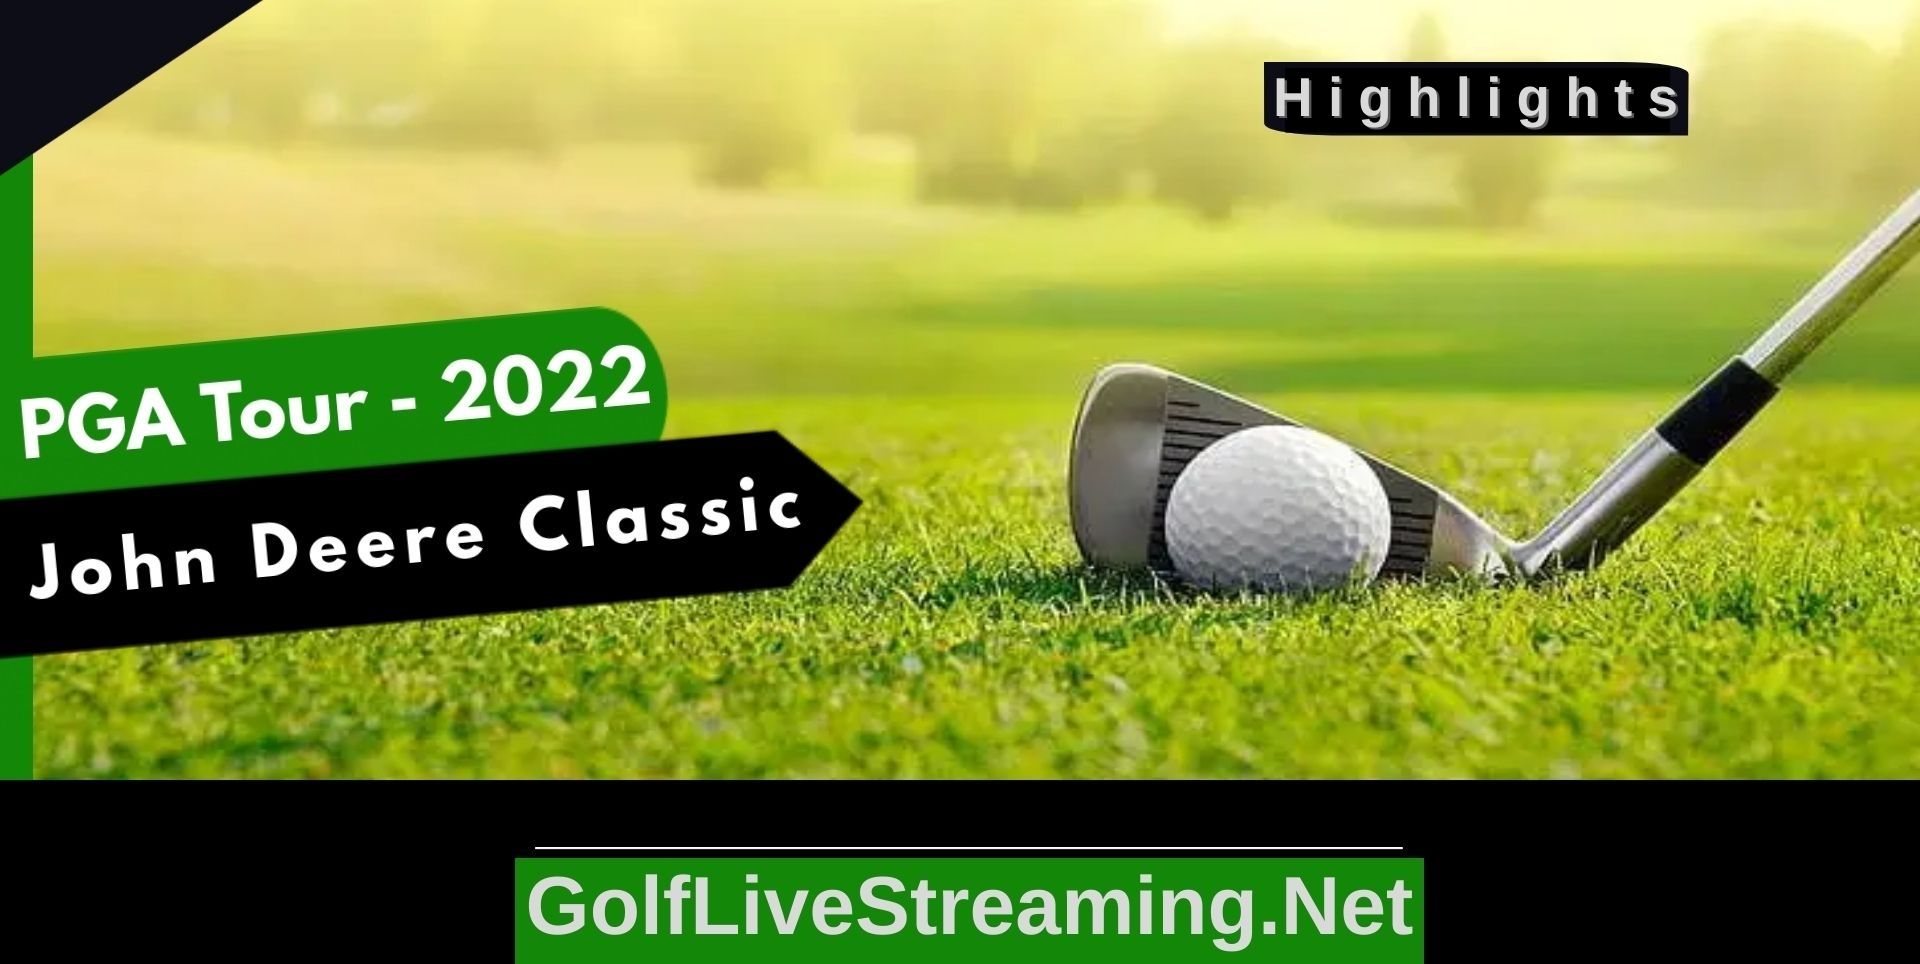 John Deere Classic Round 3 Highlights 2022 PGA Tour